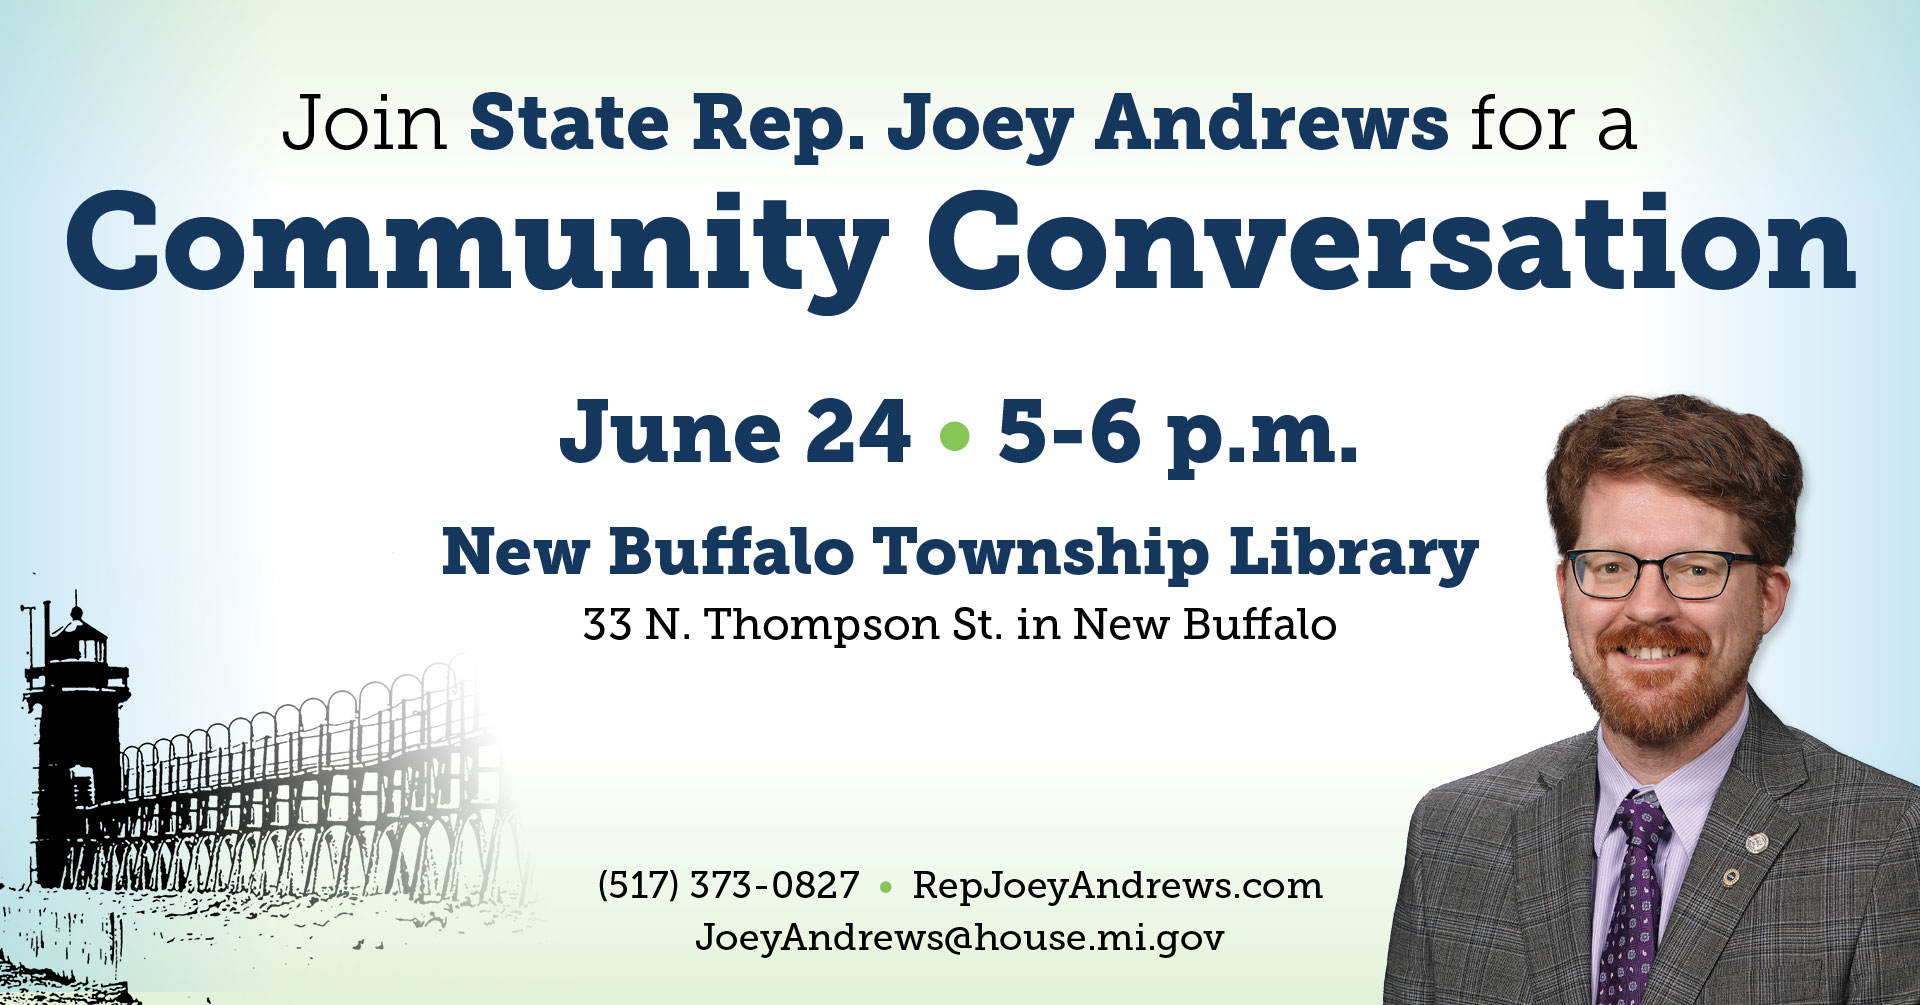 Rep. Andrews' New Buffalo Community Conversation